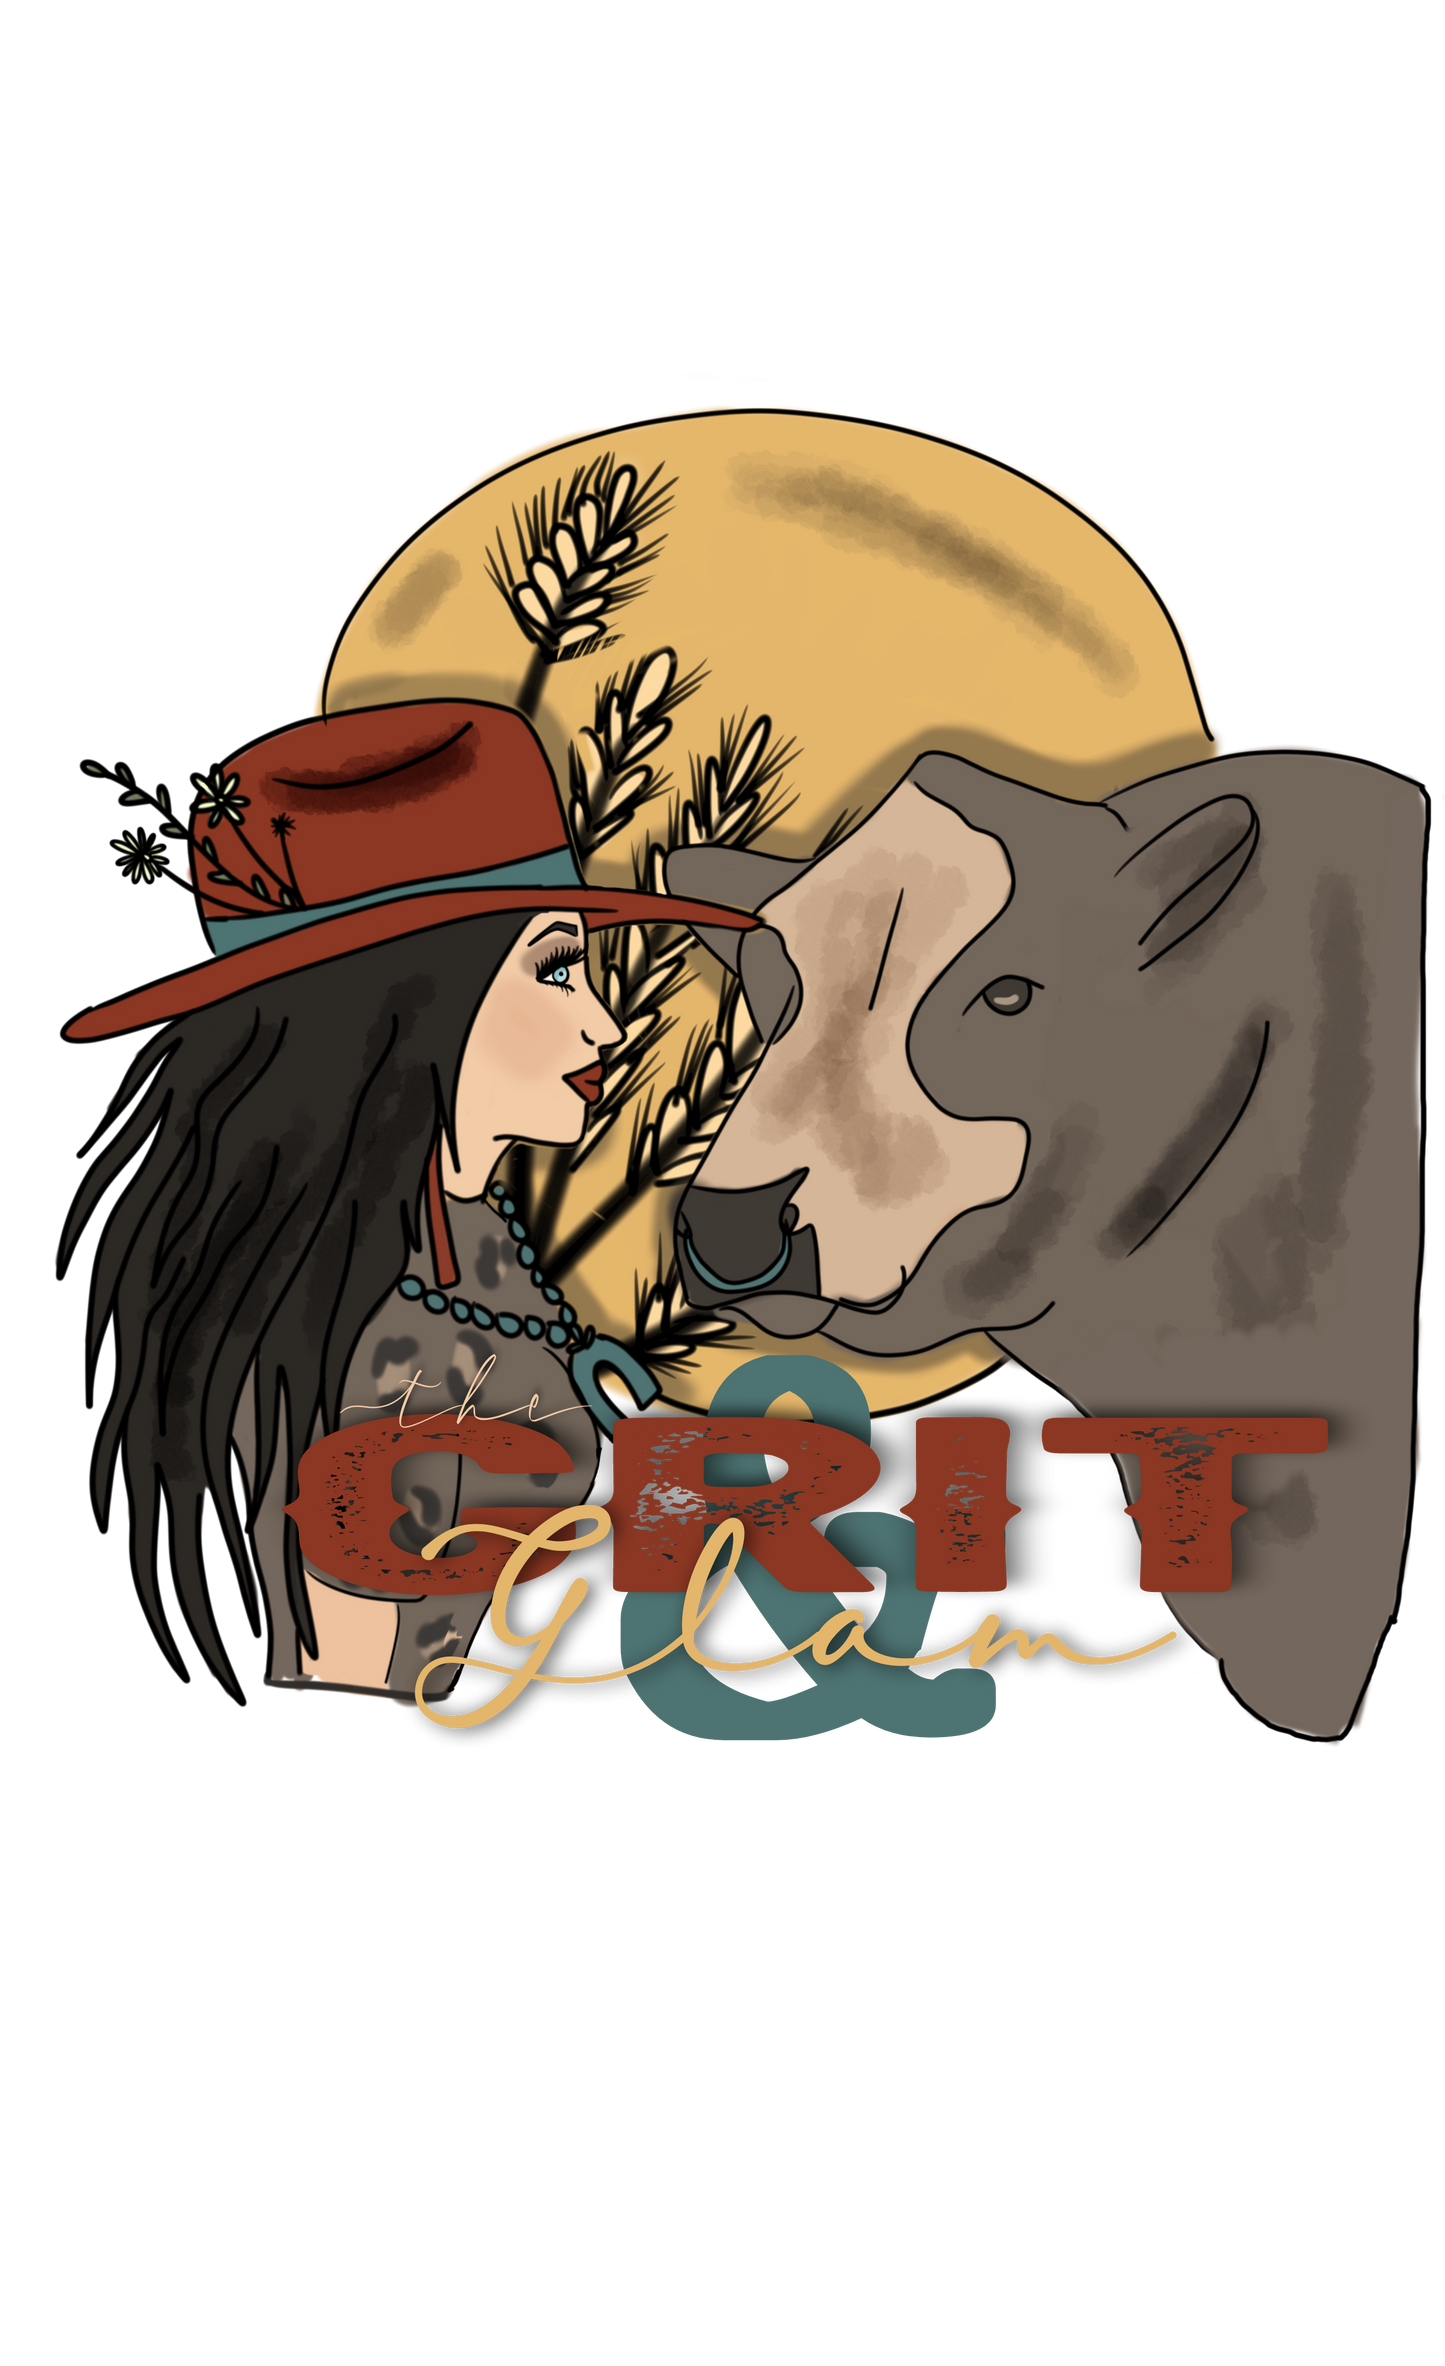 the Original |Grit+Glam| logo onesie + tee